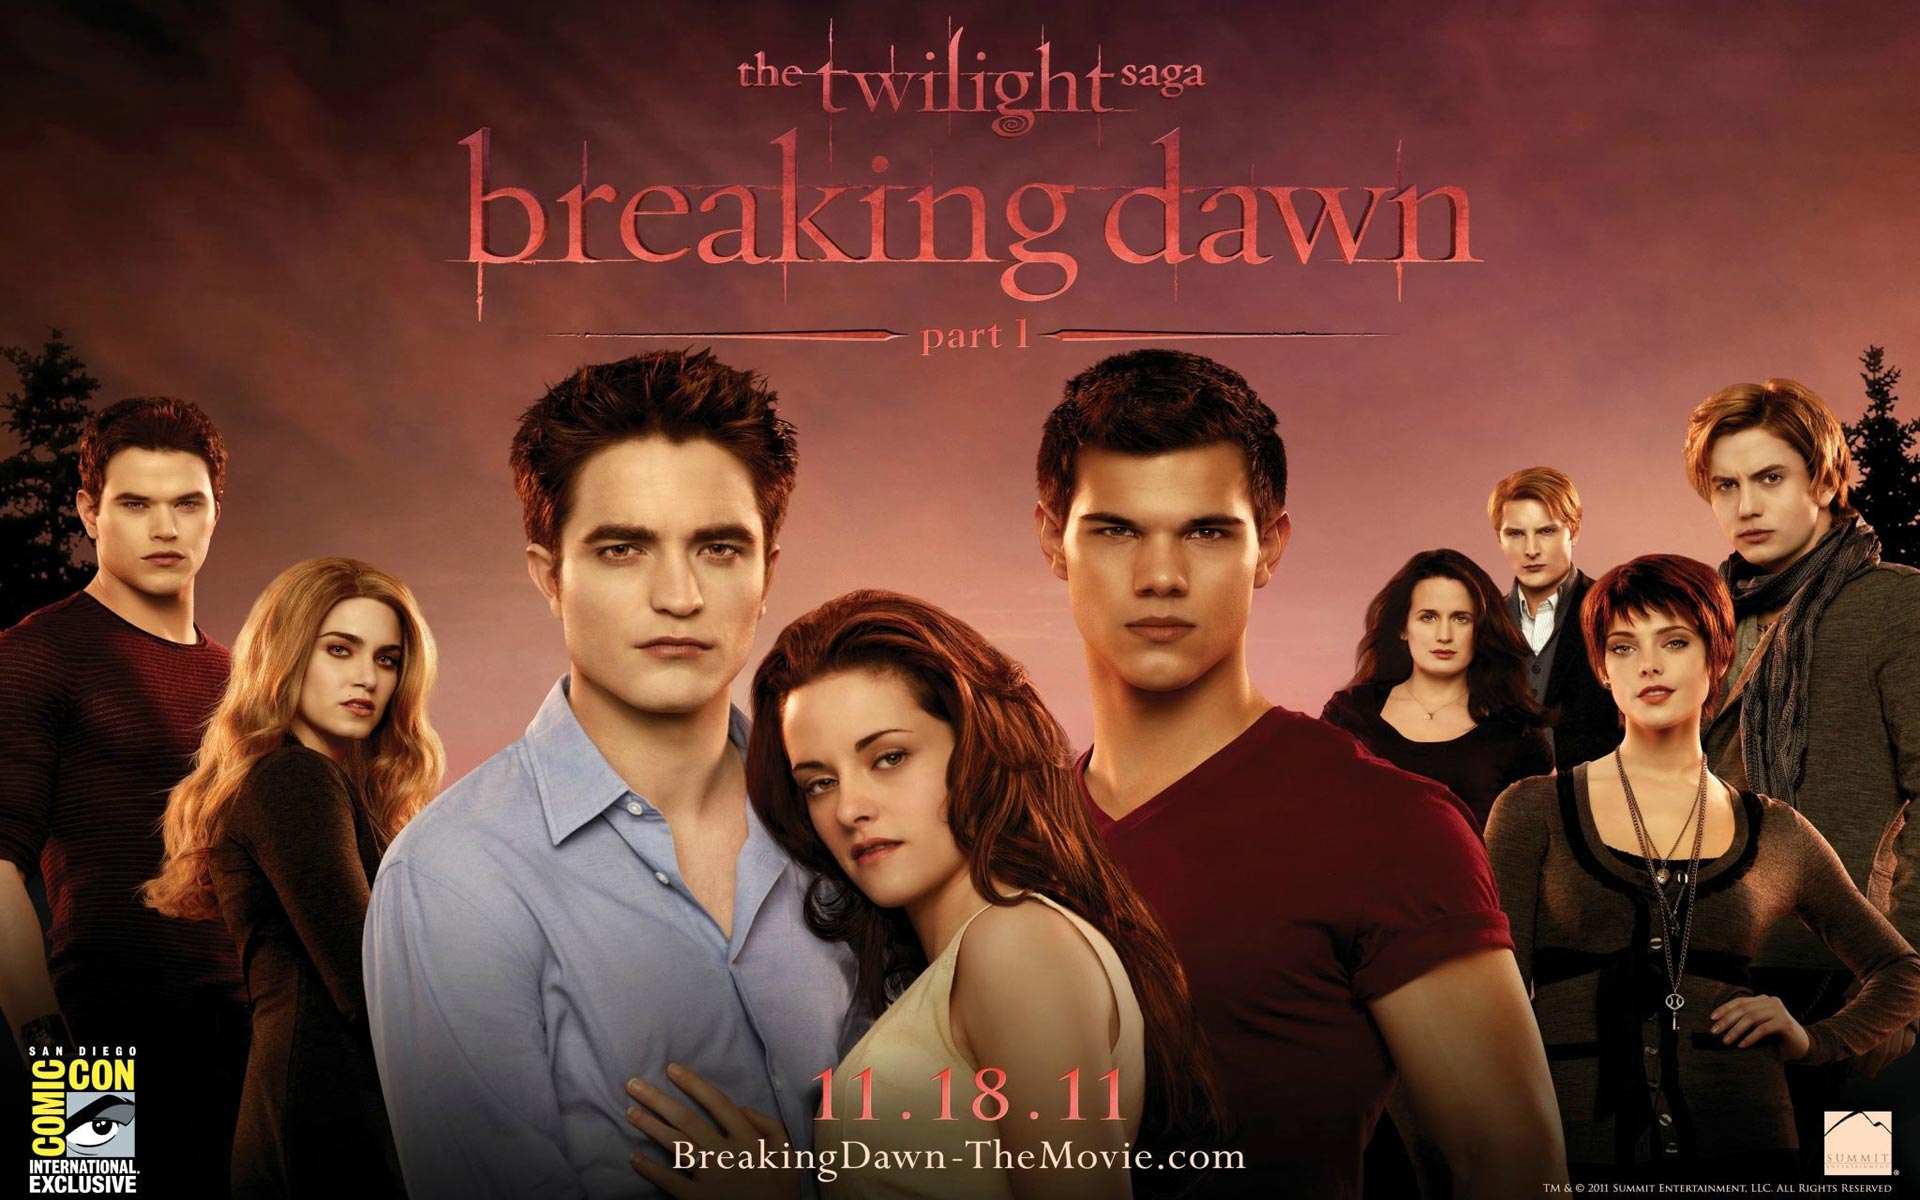 The Twilight Saga: Breaking Dawn - Part 1 Picture